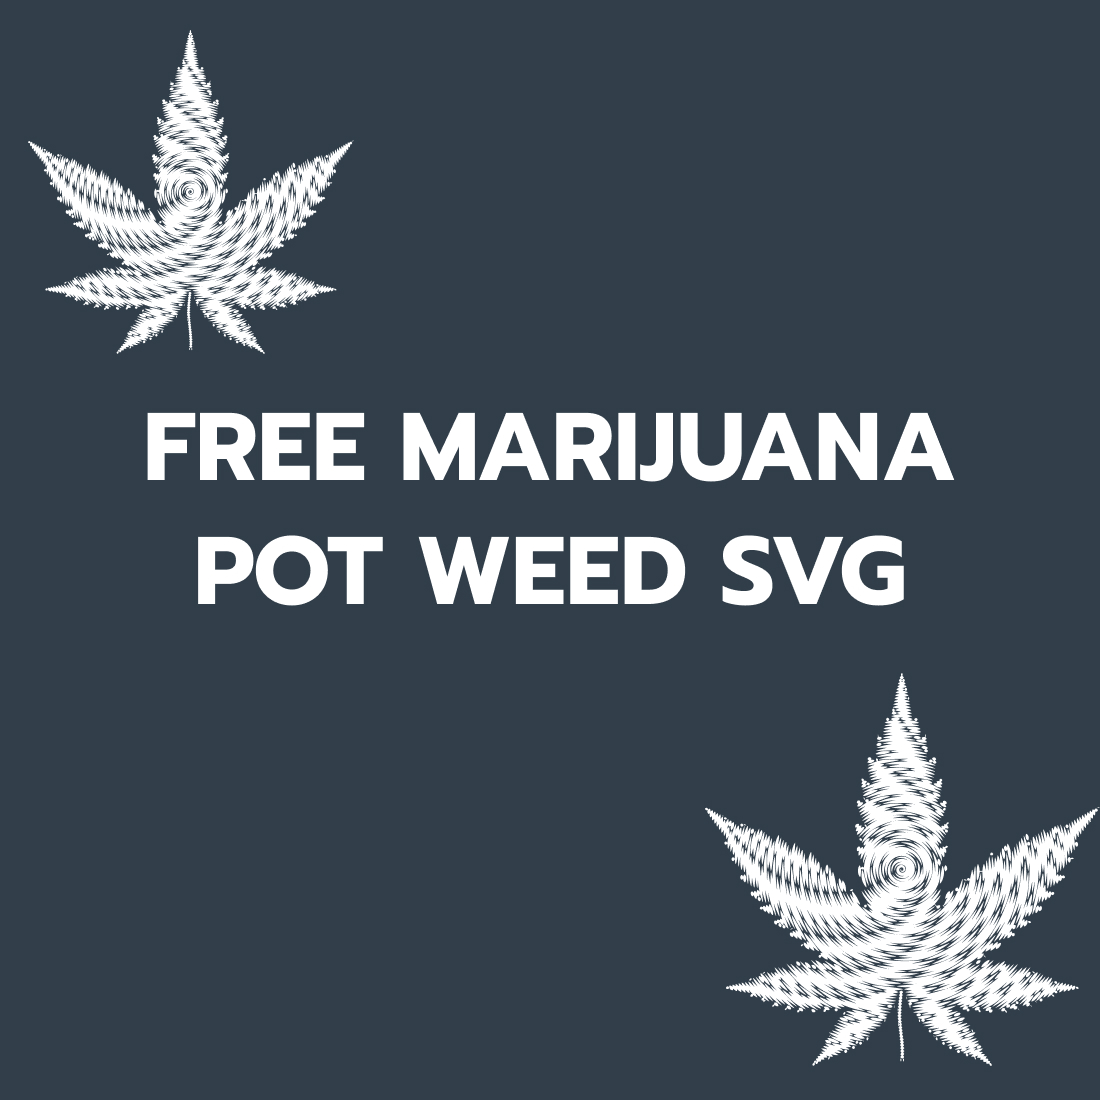 Free Marijuana Pot Weed SVG cover image.